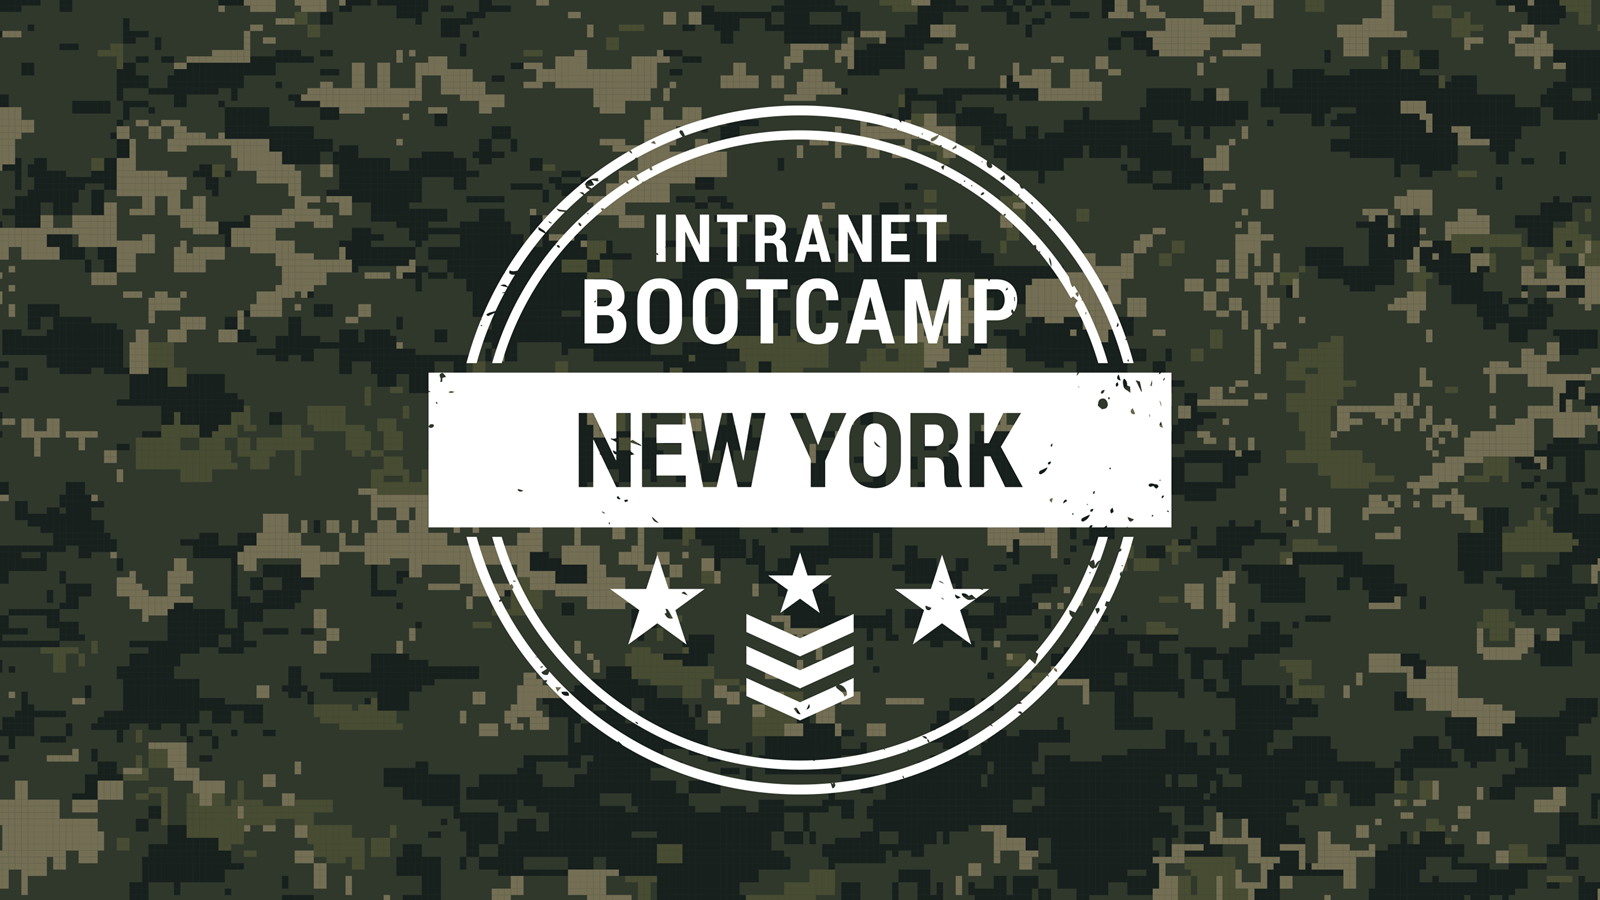 Intranet bootcamp badge